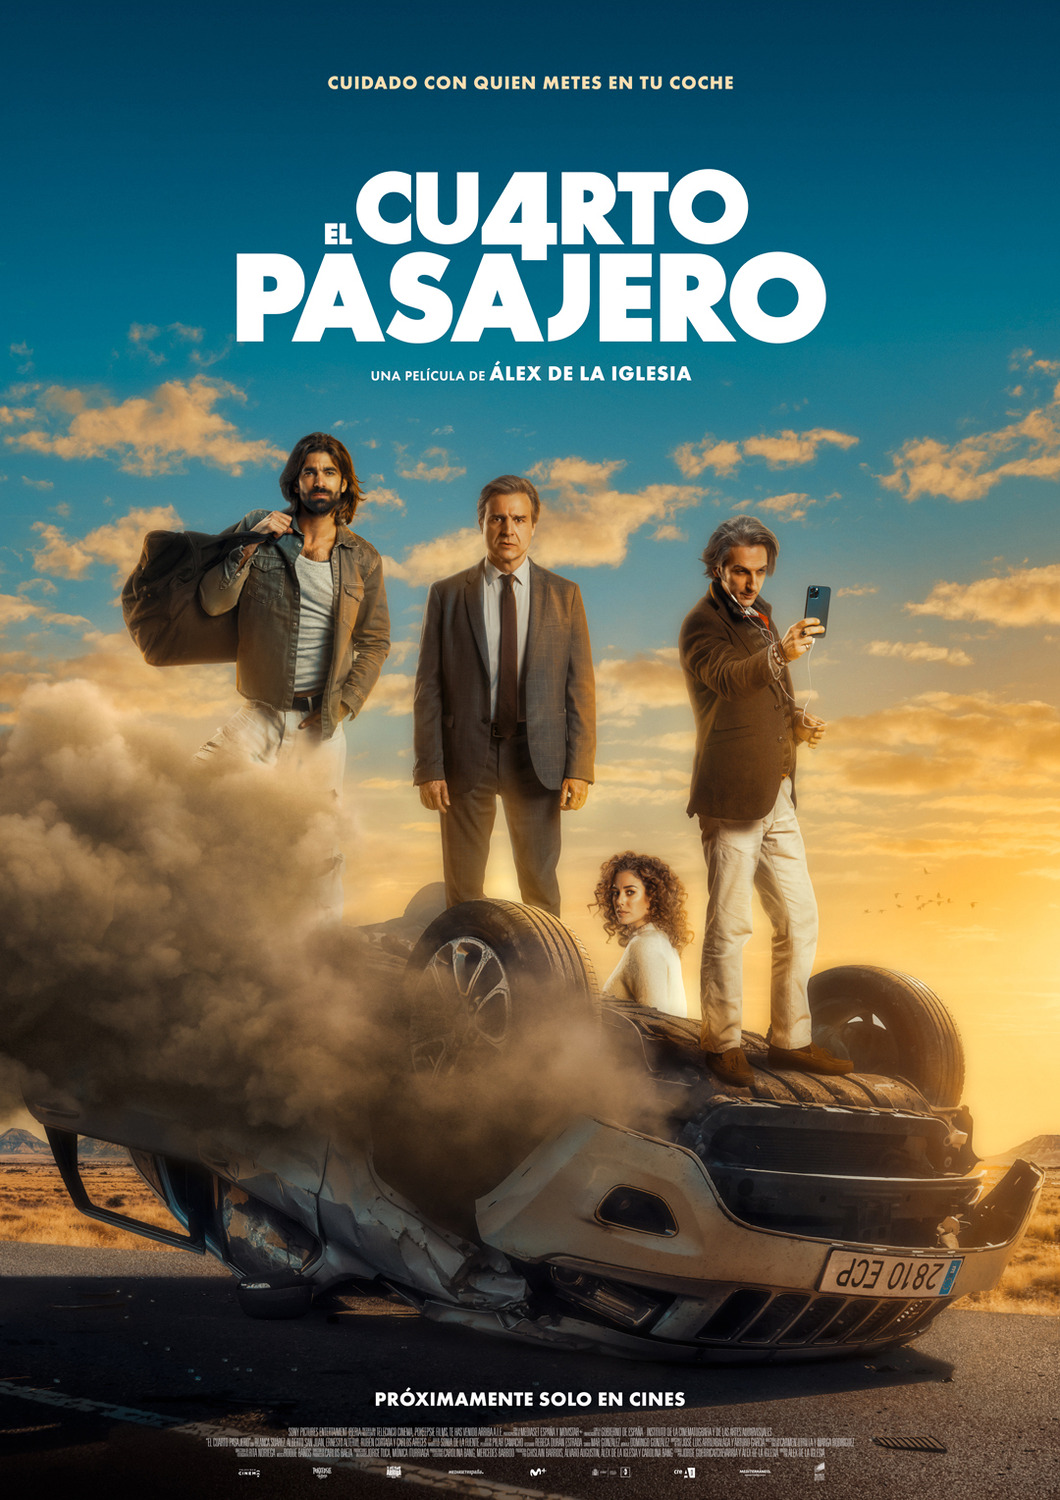 Extra Large Movie Poster Image for El cuarto pasajero (#2 of 2)